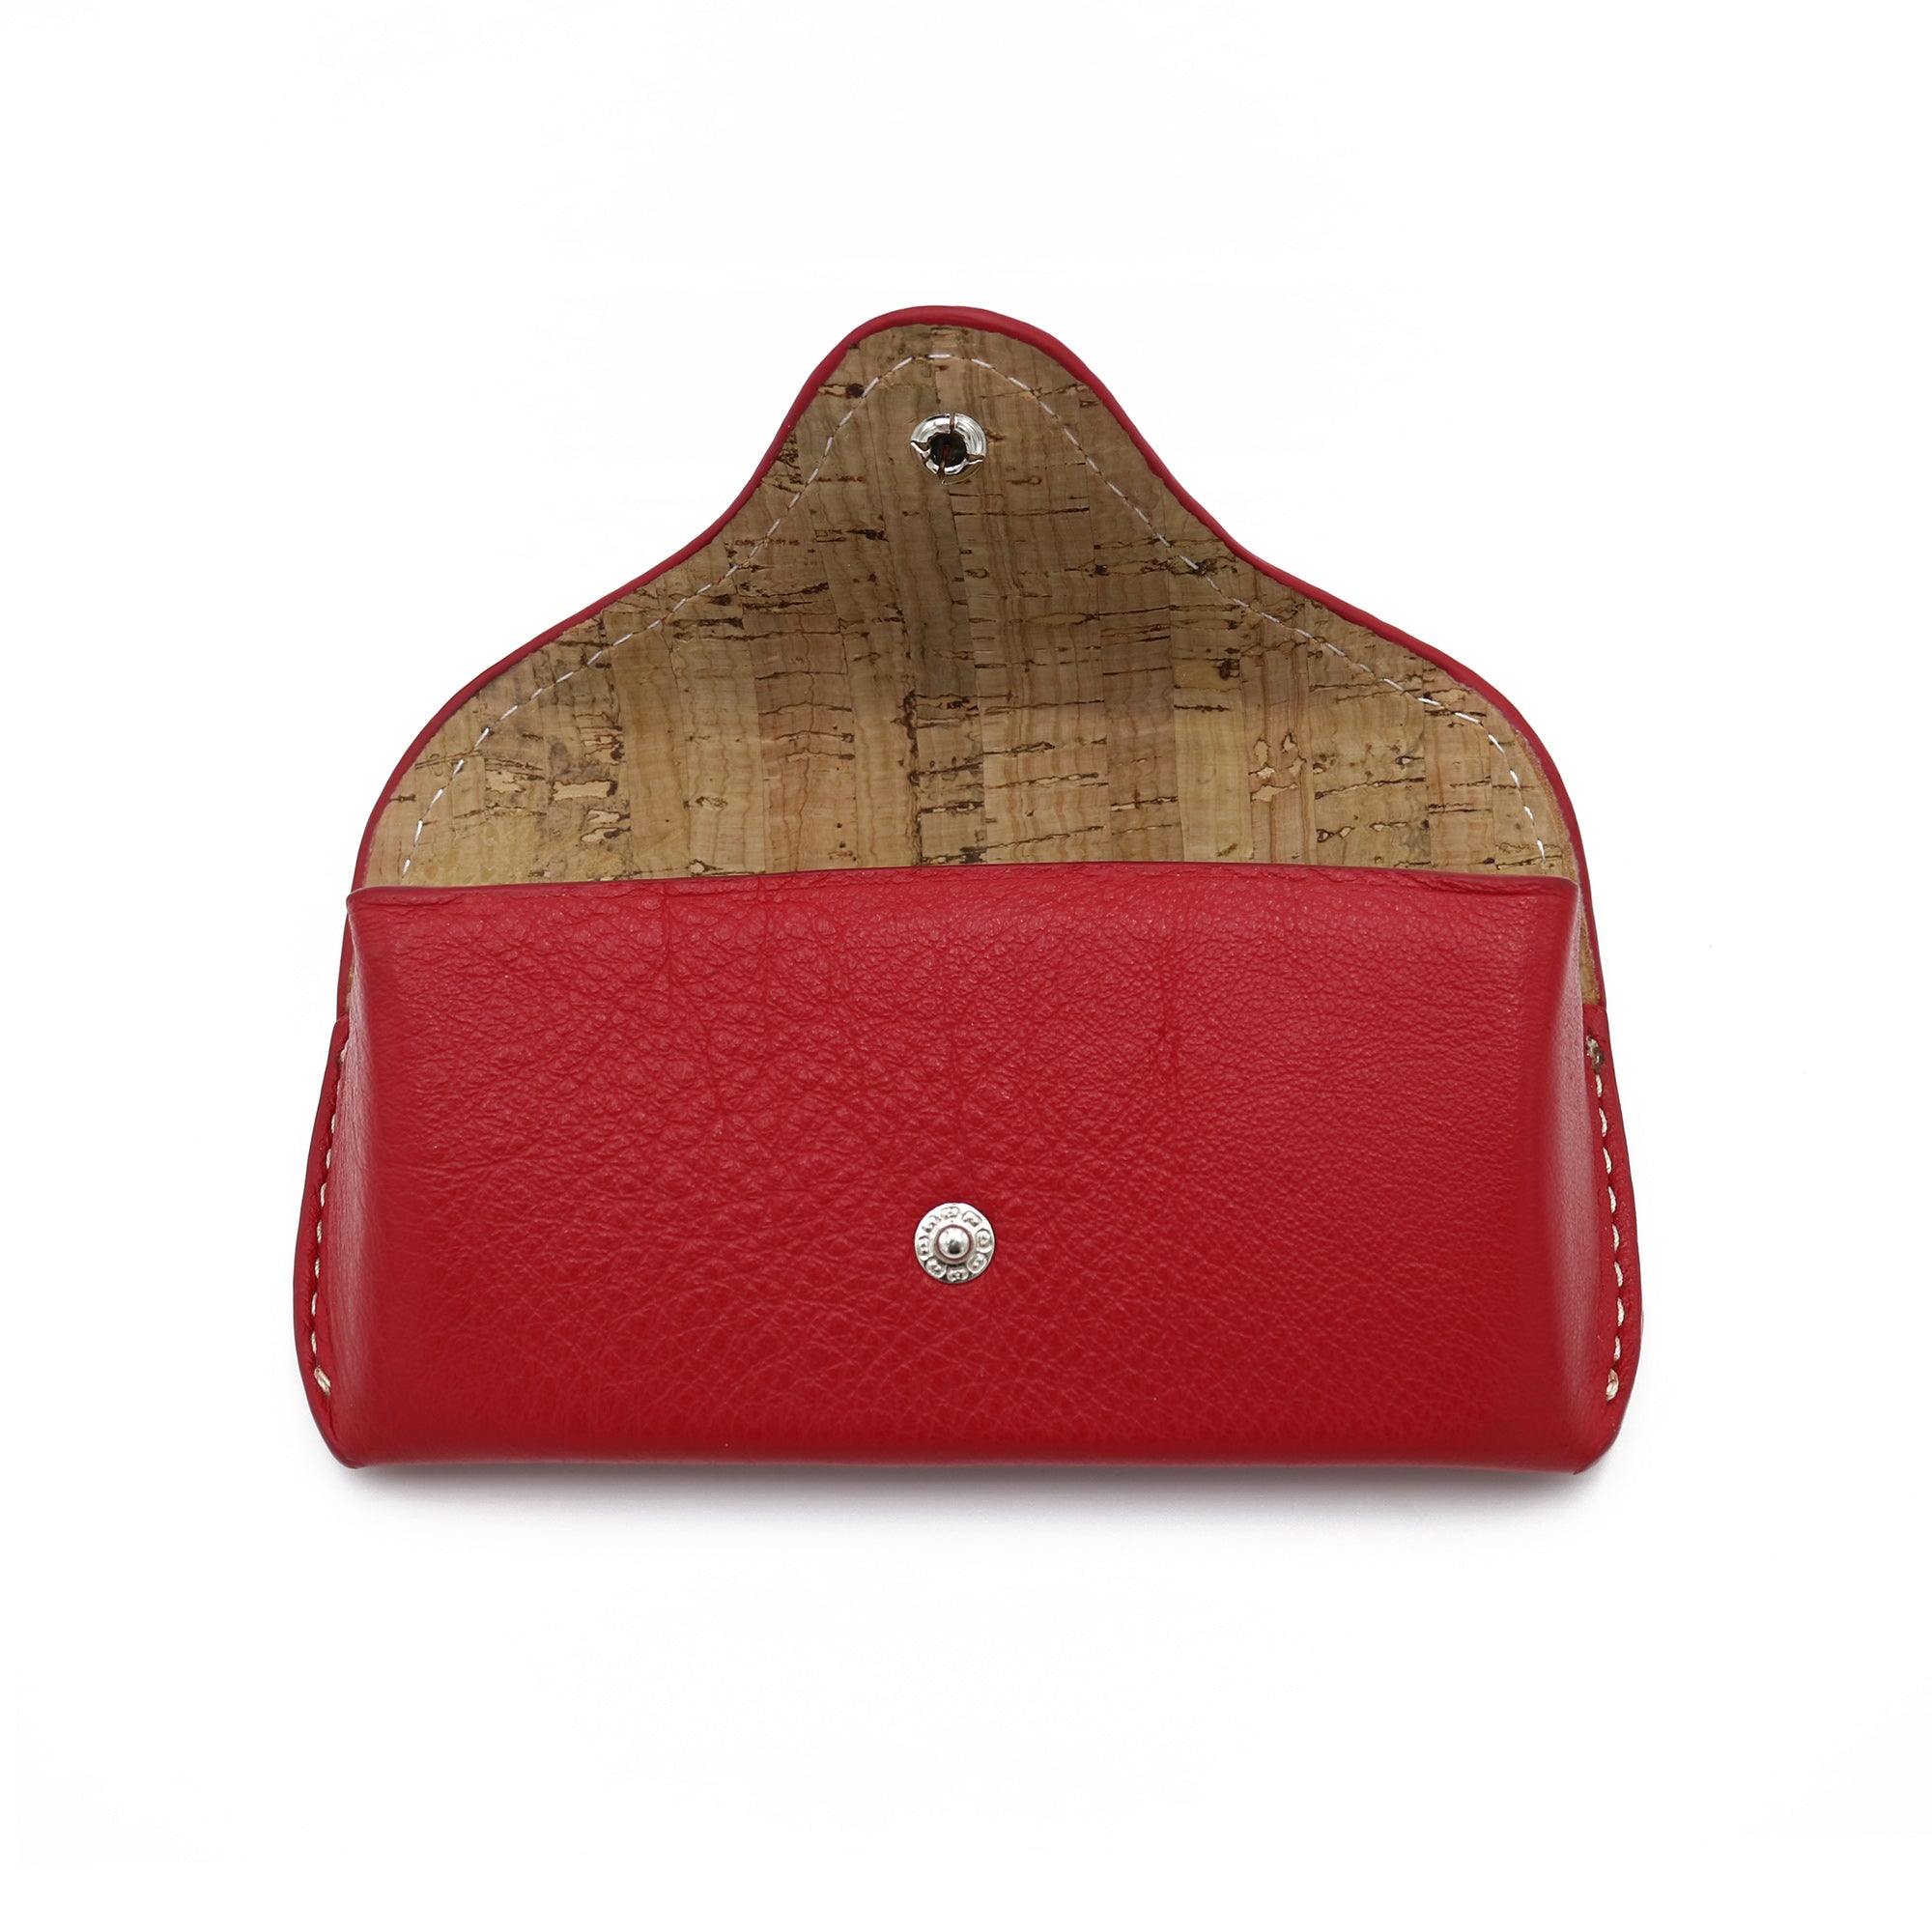 Sunglass Case - Italian Pebble Grain Leather Lined with Cork - Stonestreet Leather